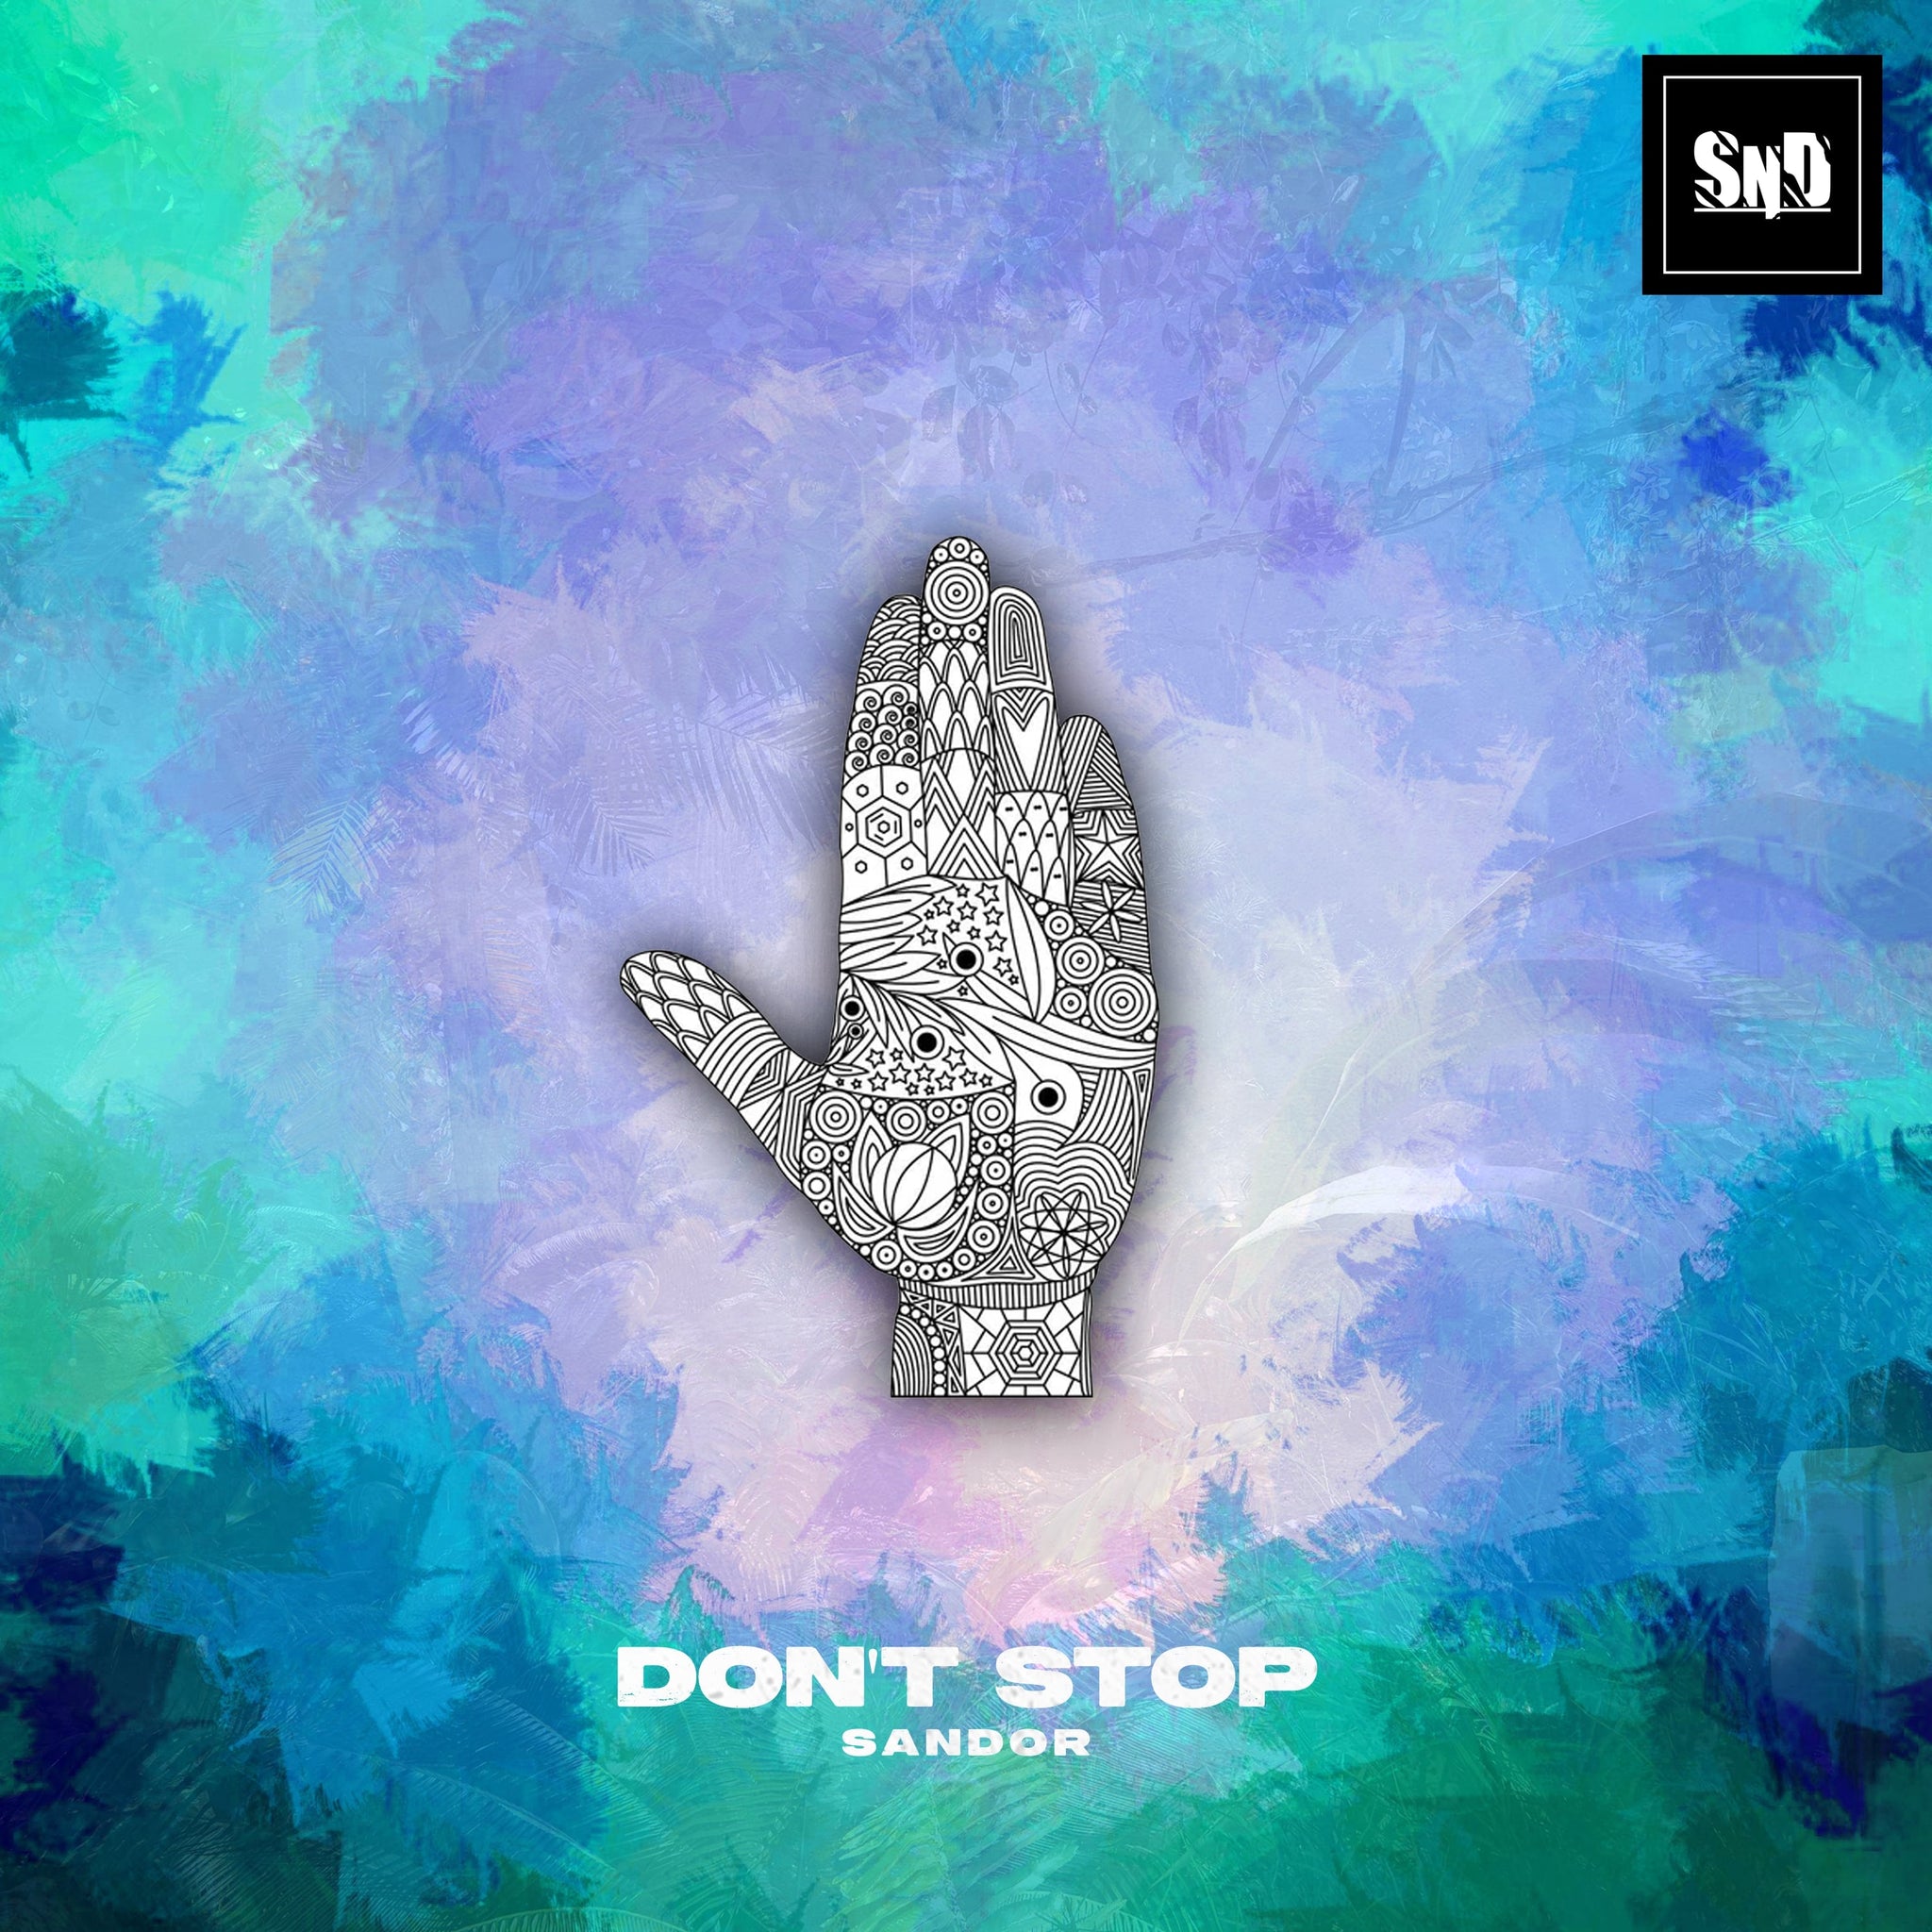 Don't Stop - Sandor - Scraps Audio